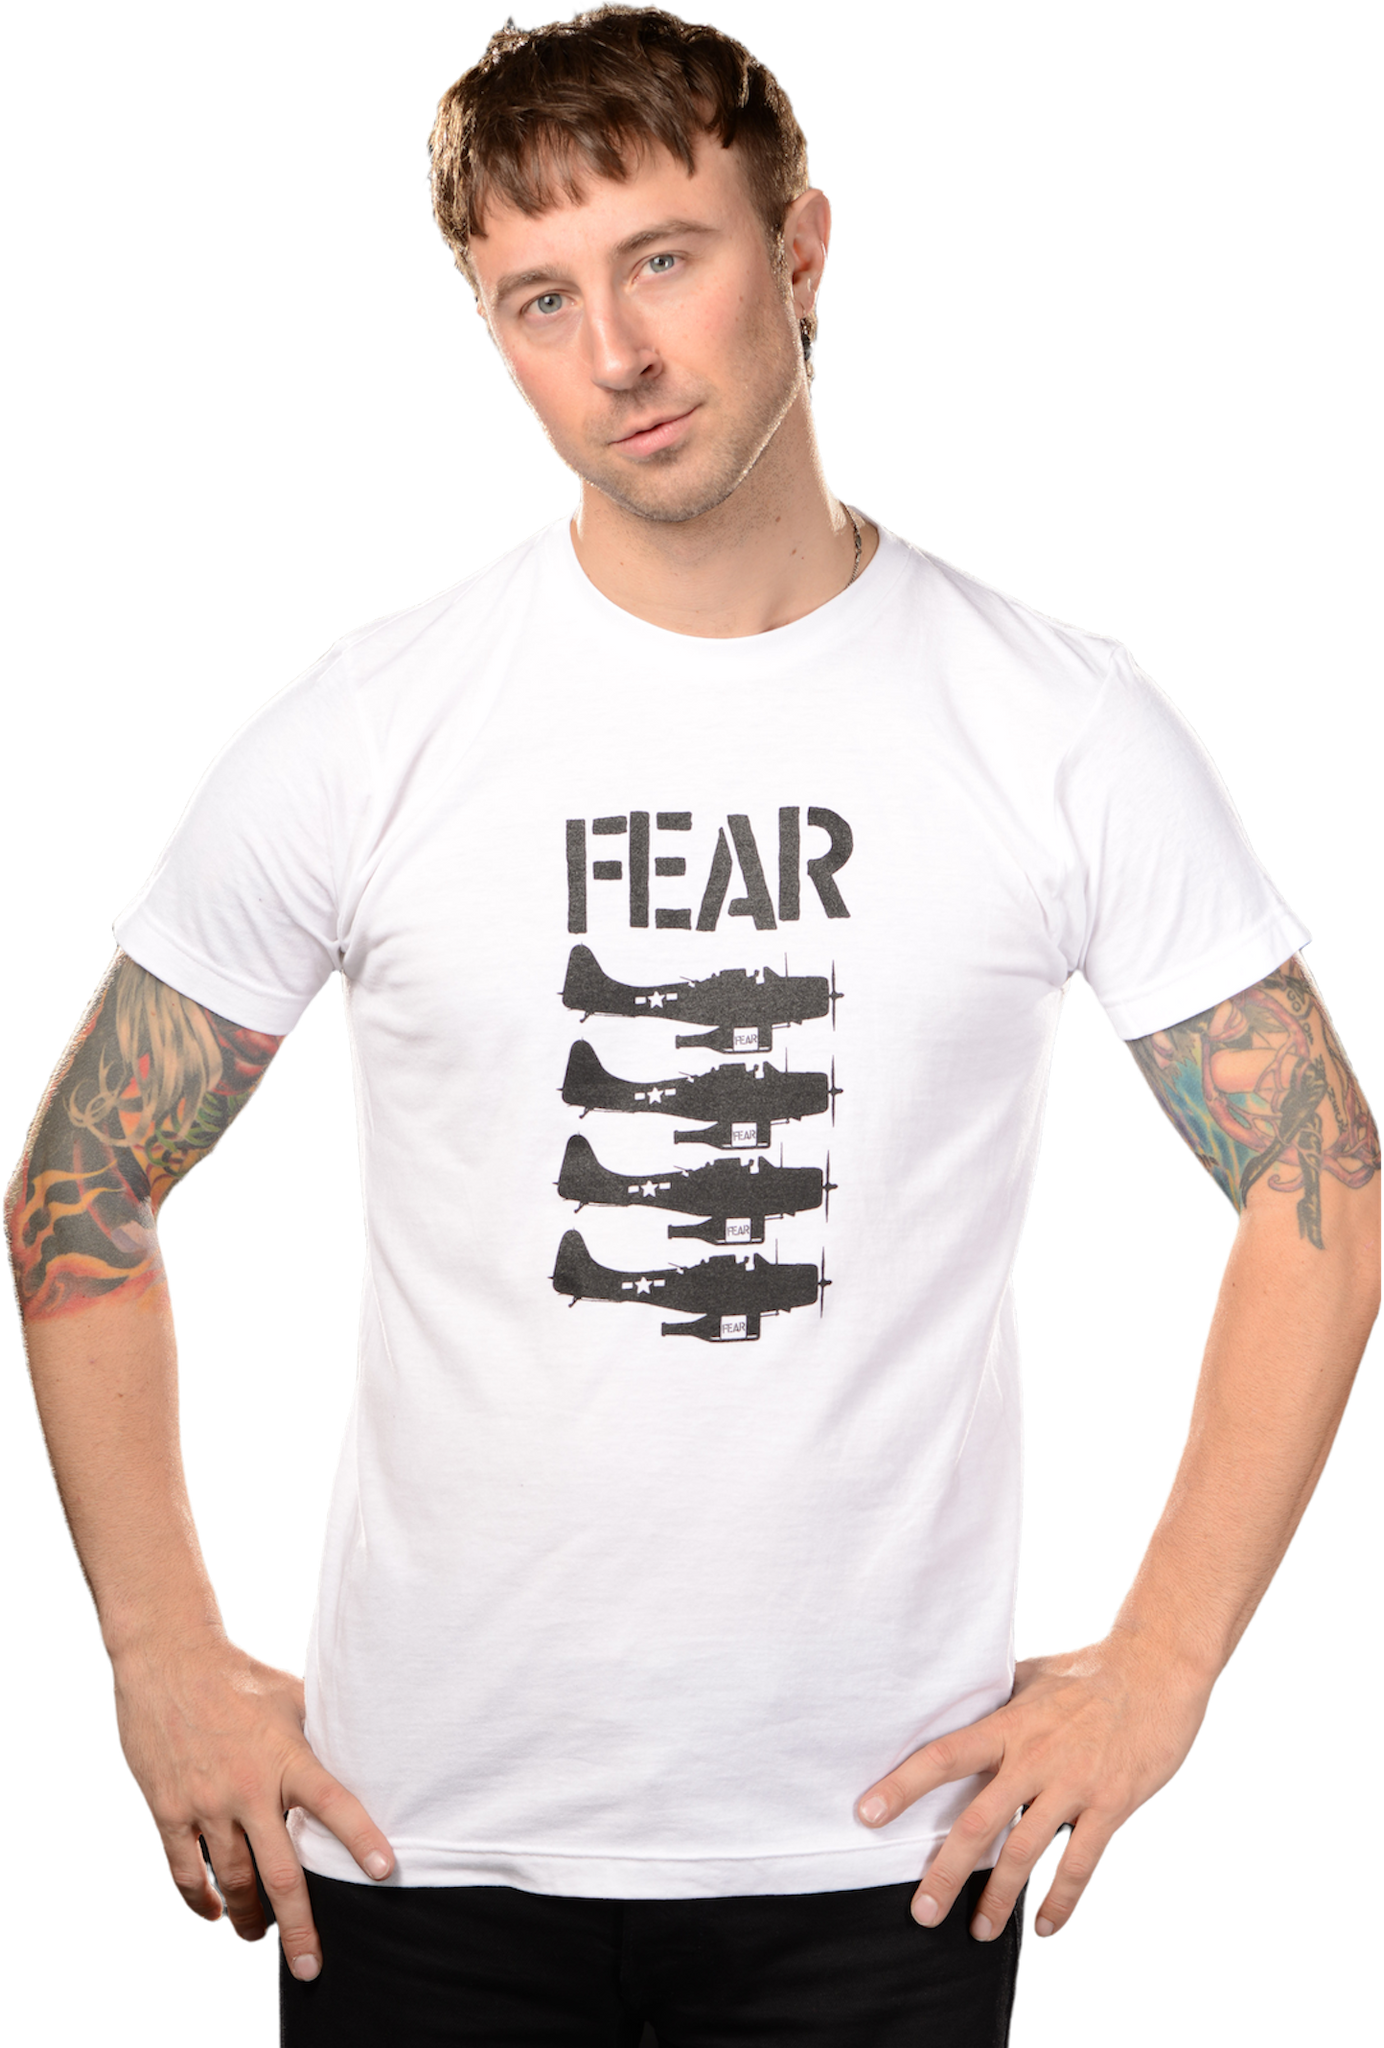 FEAR - MENS "BEER BOMBERS" T-SHIRT